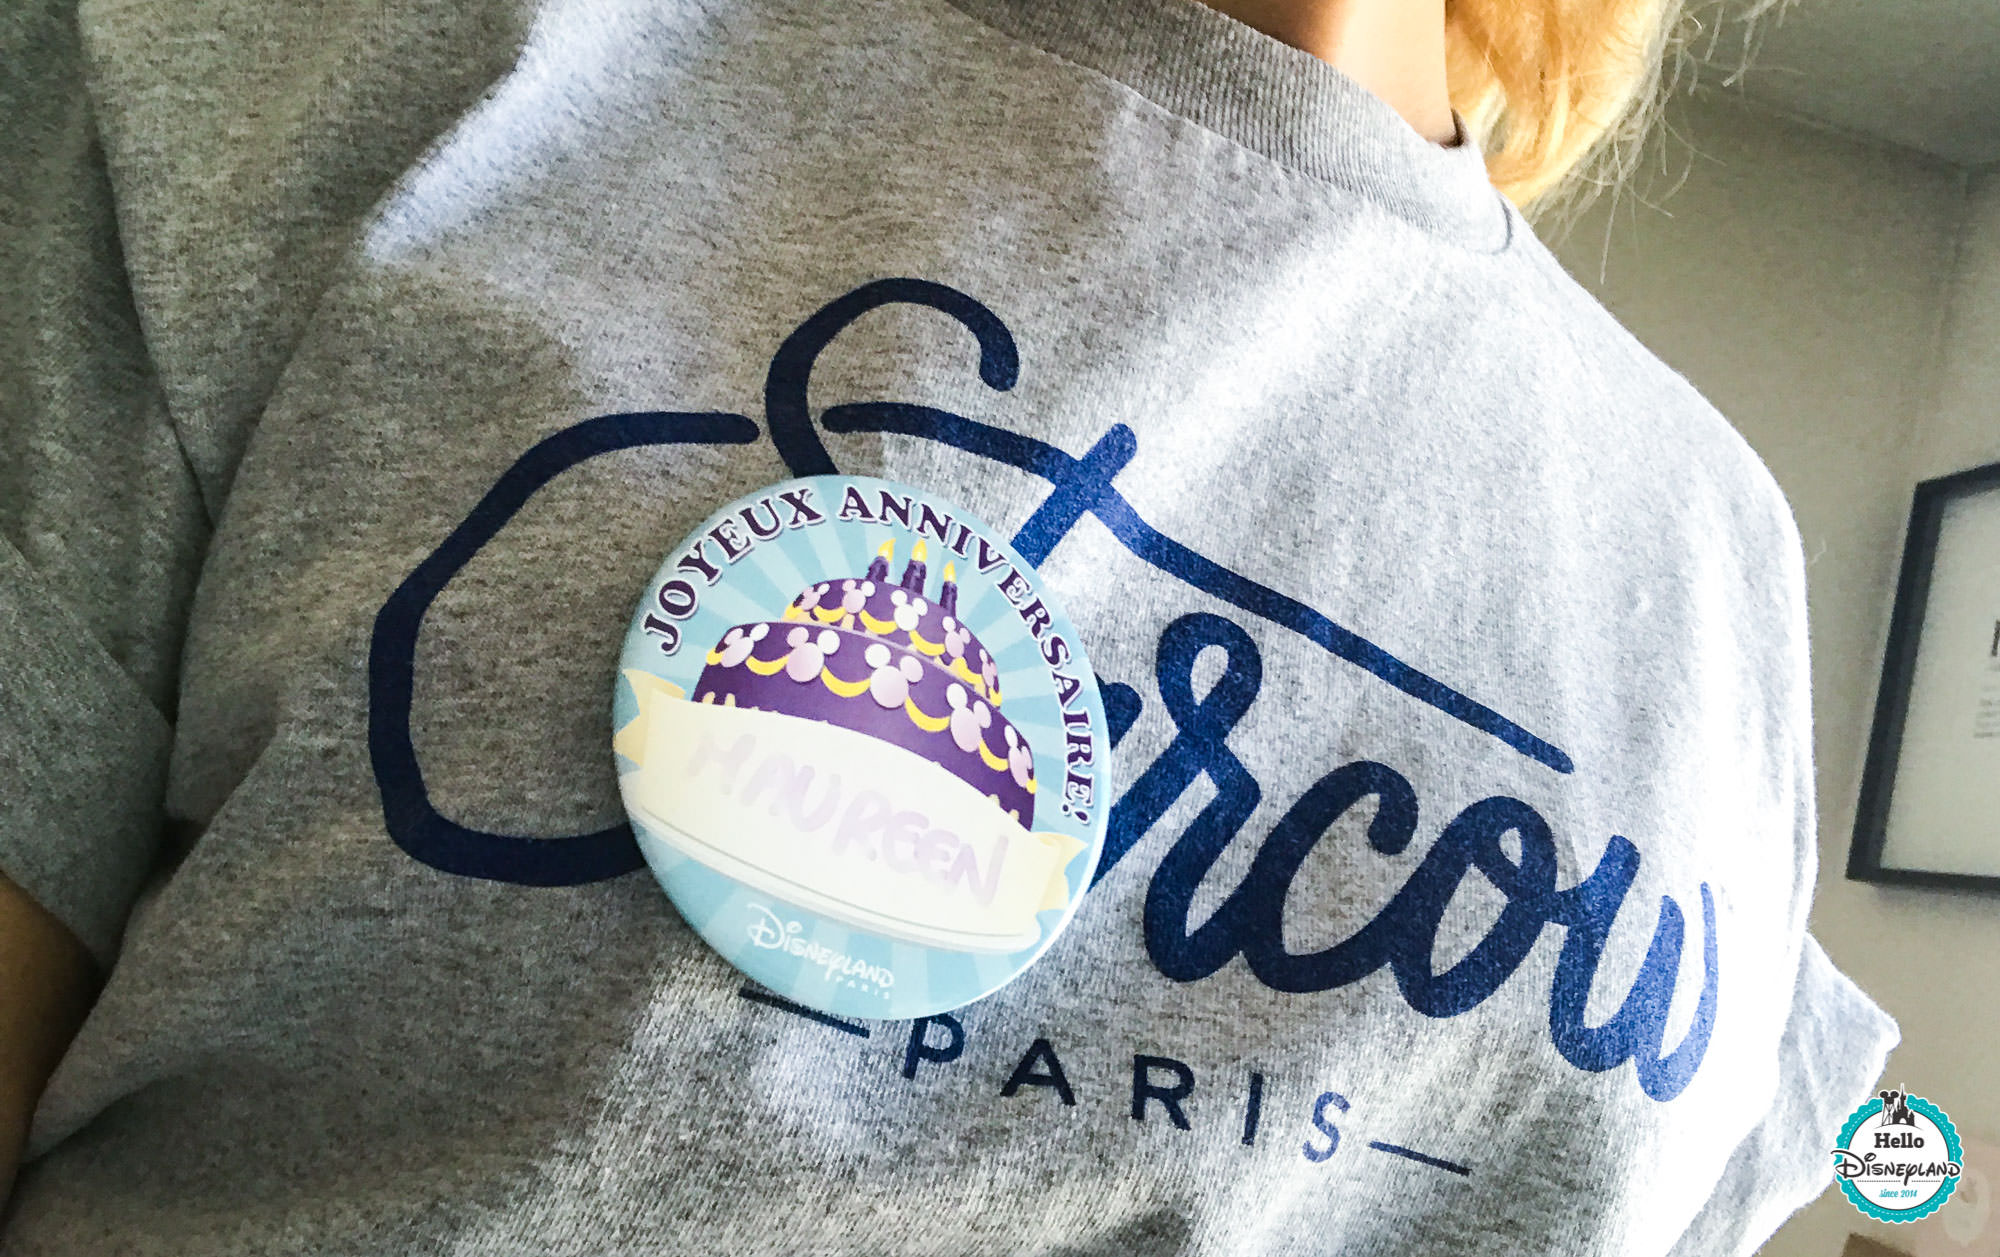 Badges gratuits Disneyland Paris